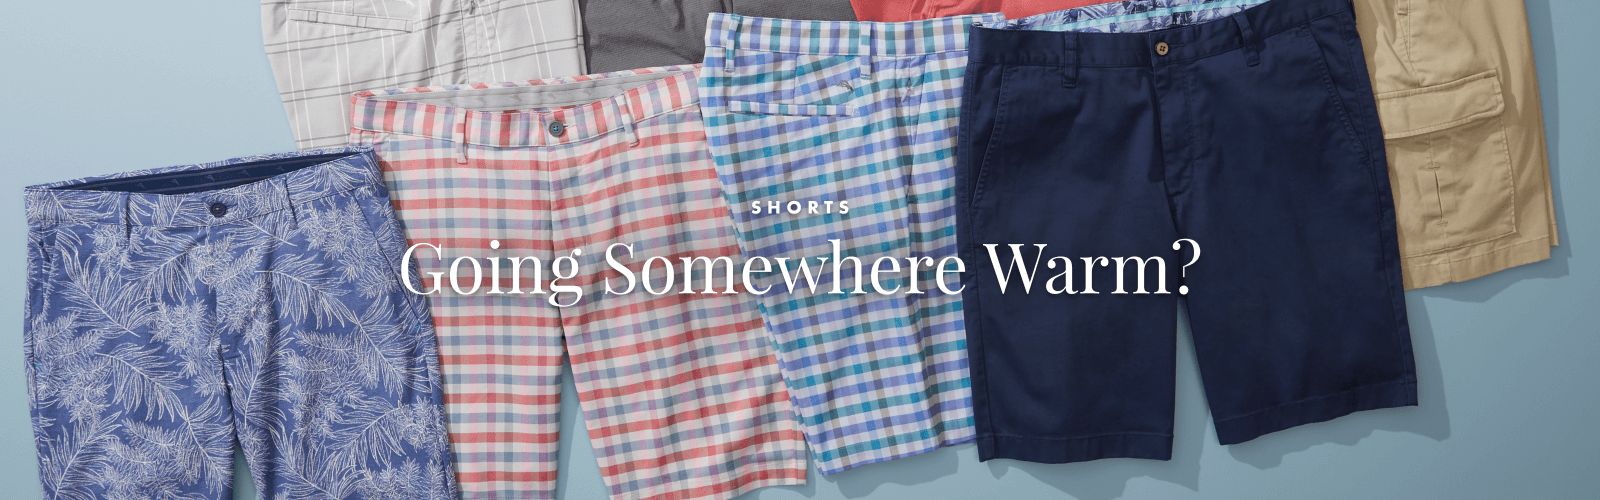 Shorts: Going Somewhere Warm?